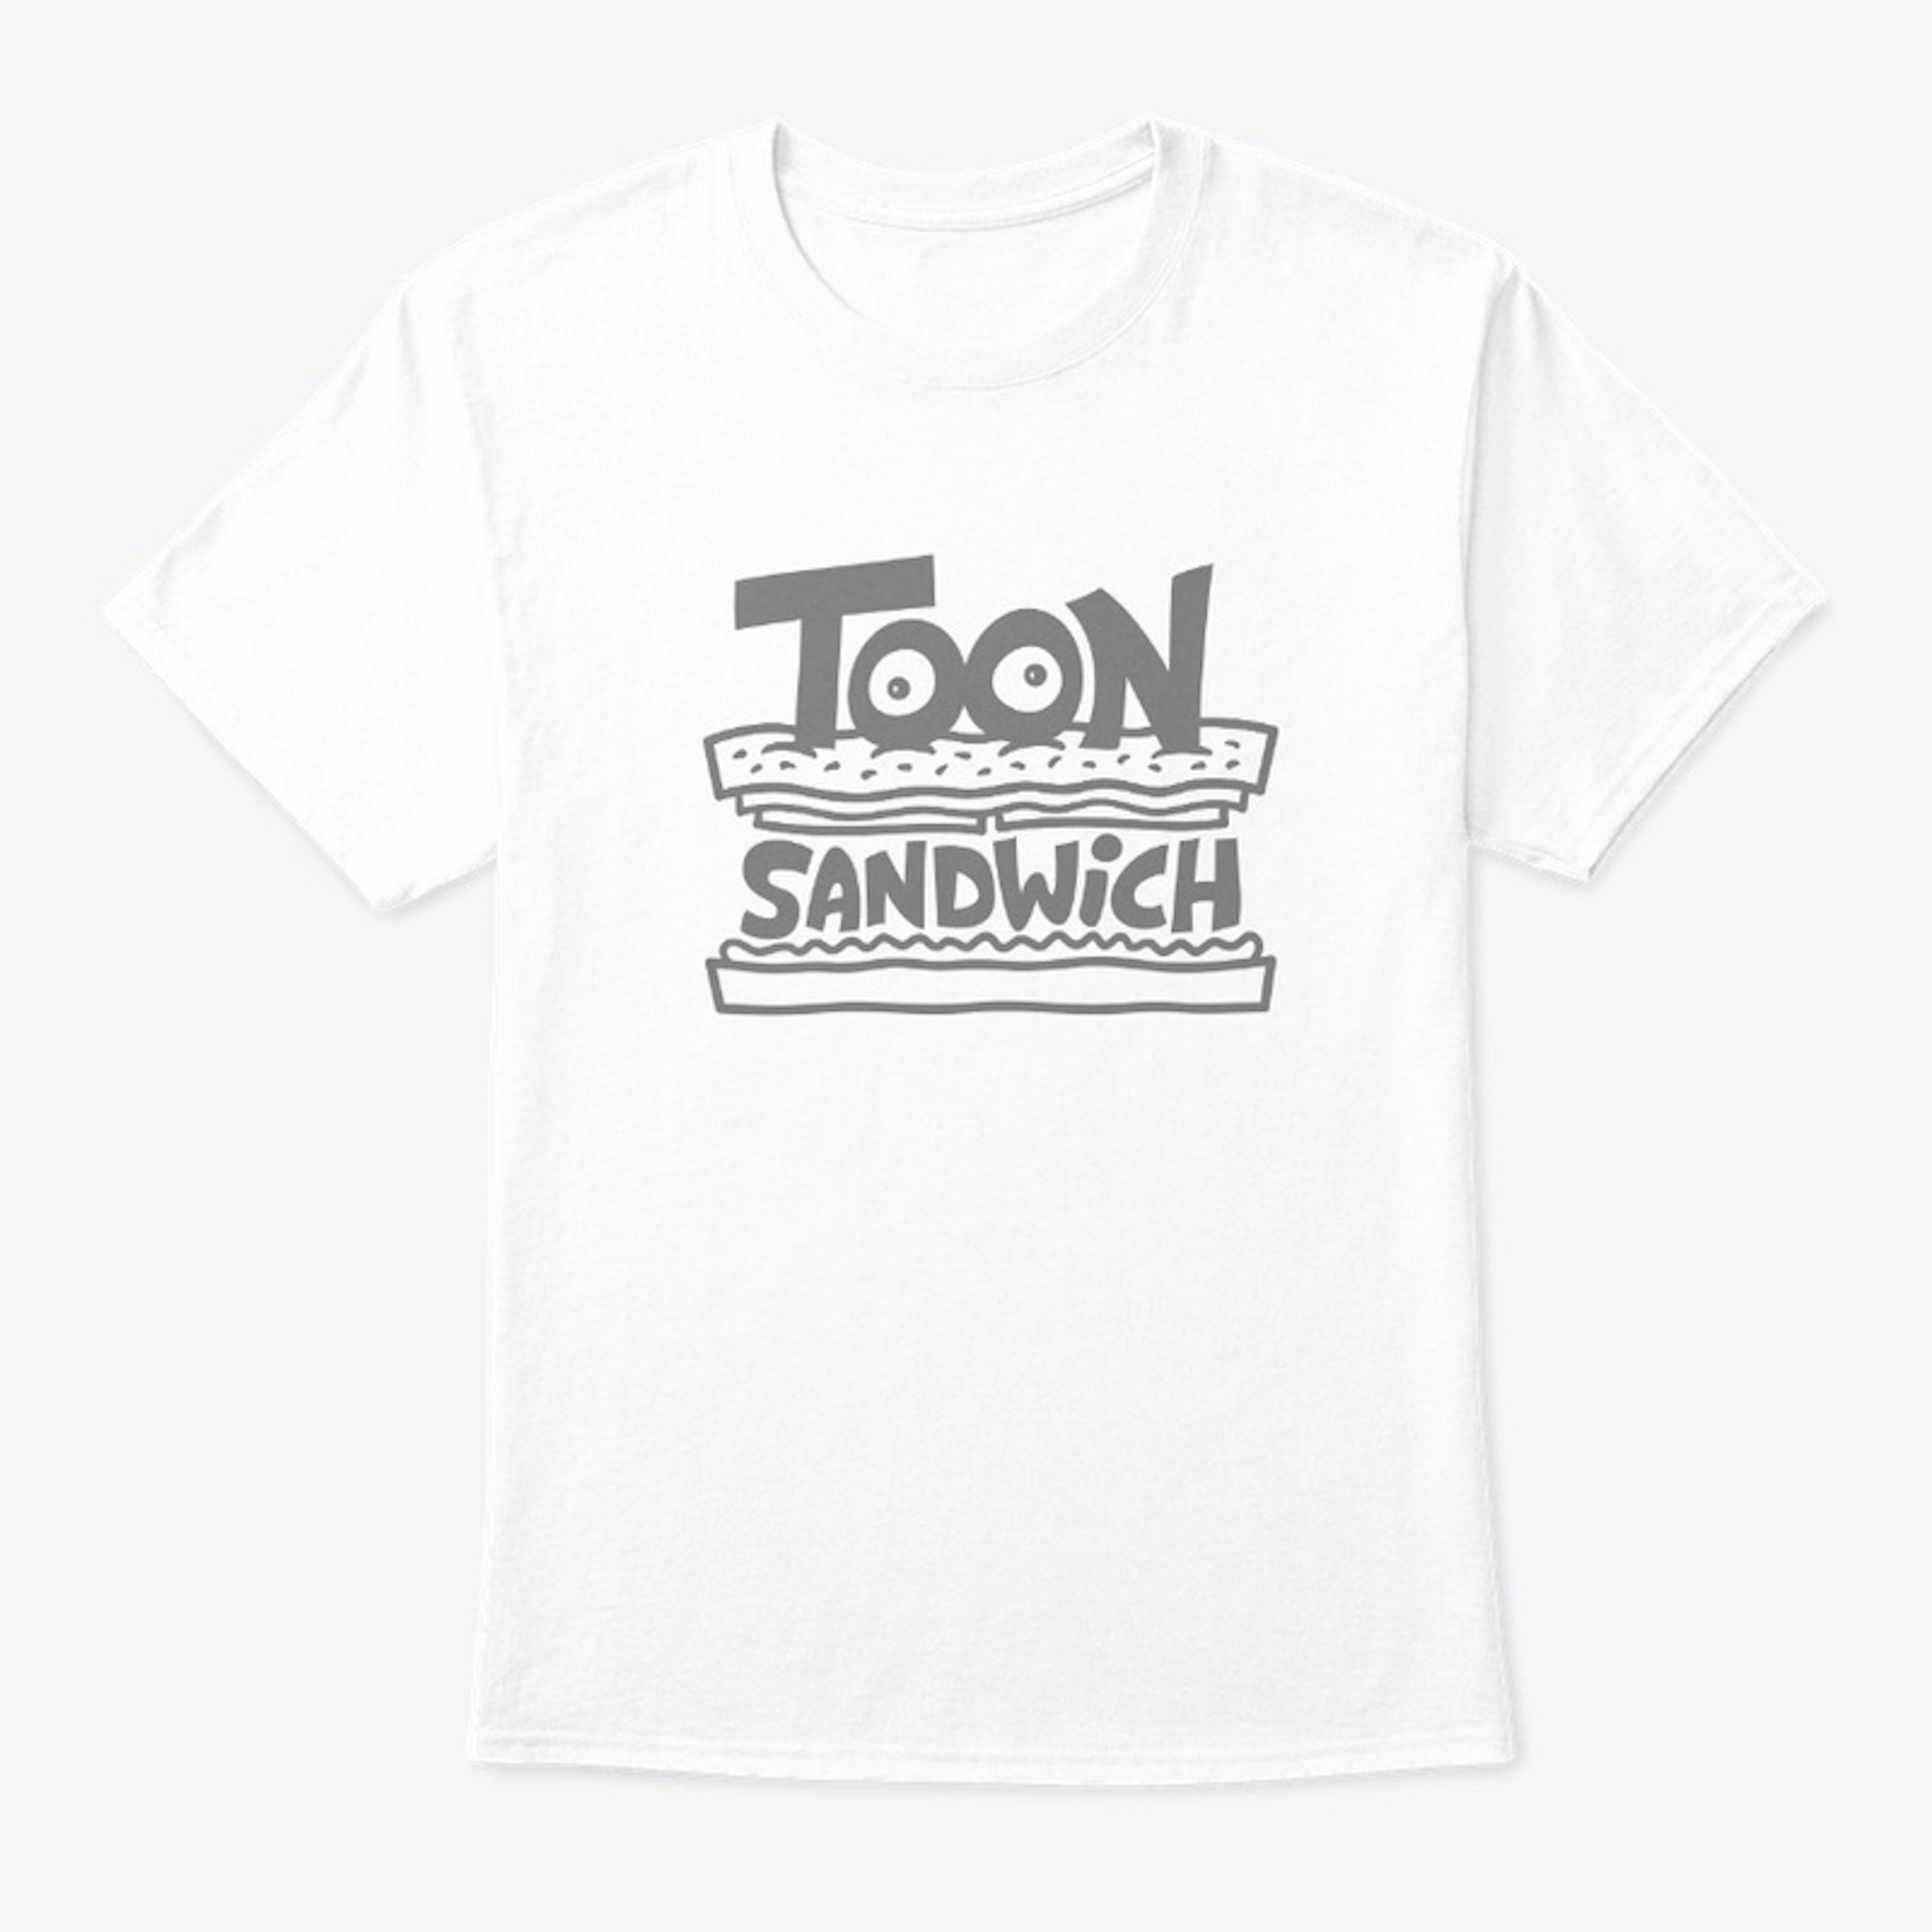 Toon Sandwich Logo - Black